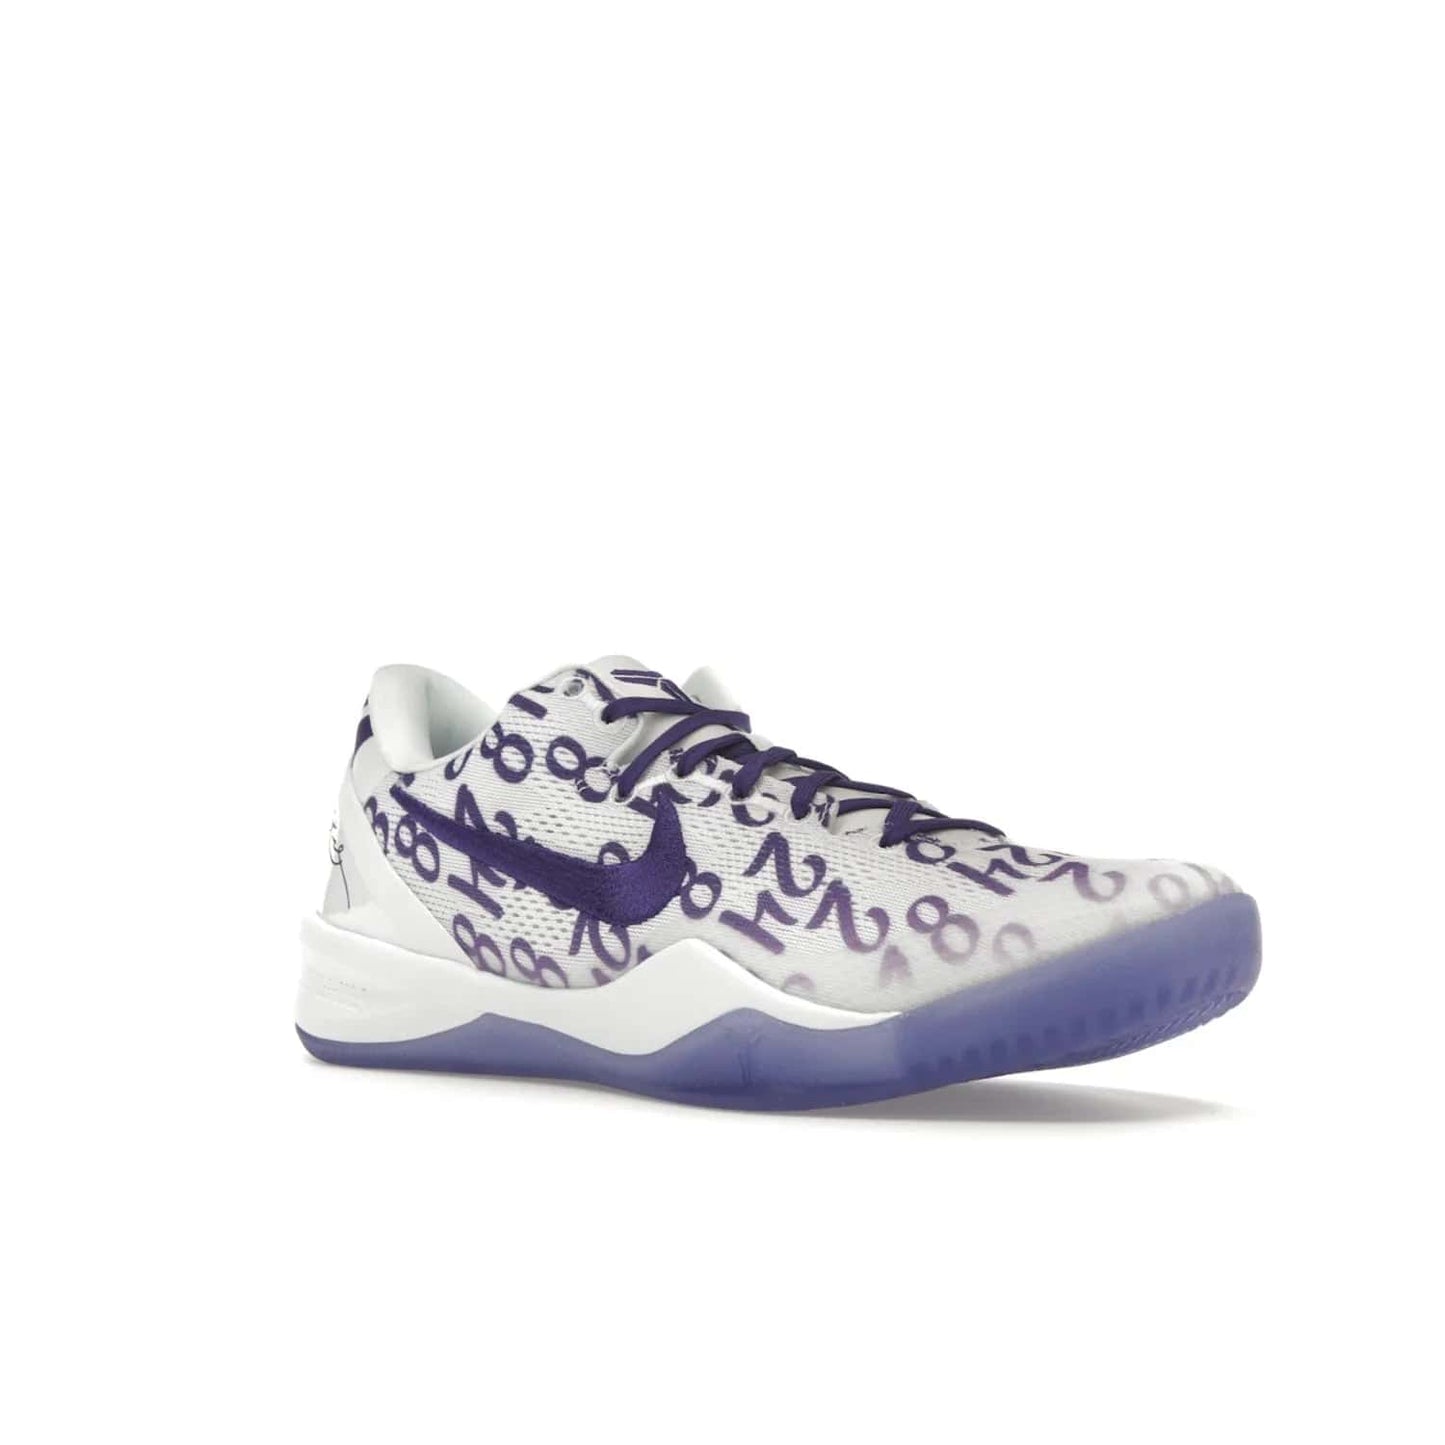 Nike Kobe 8 Protro Court Purple - Image 5 - Only at www.BallersClubKickz.com - 